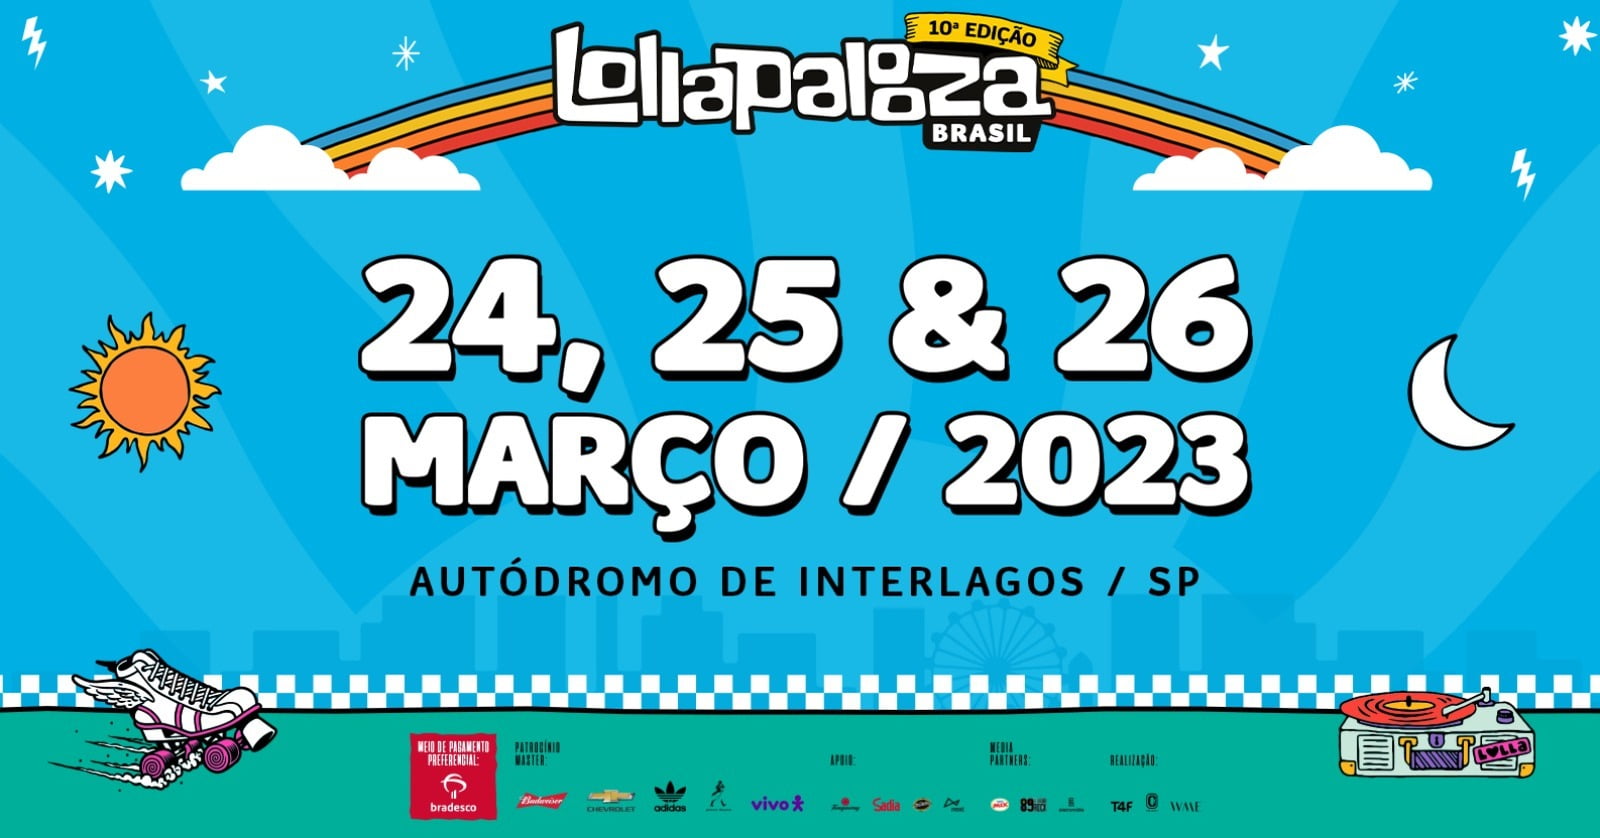 Ingressos Lollapalooza Brasil 2023 estão disponíveis (imagem: Canva)